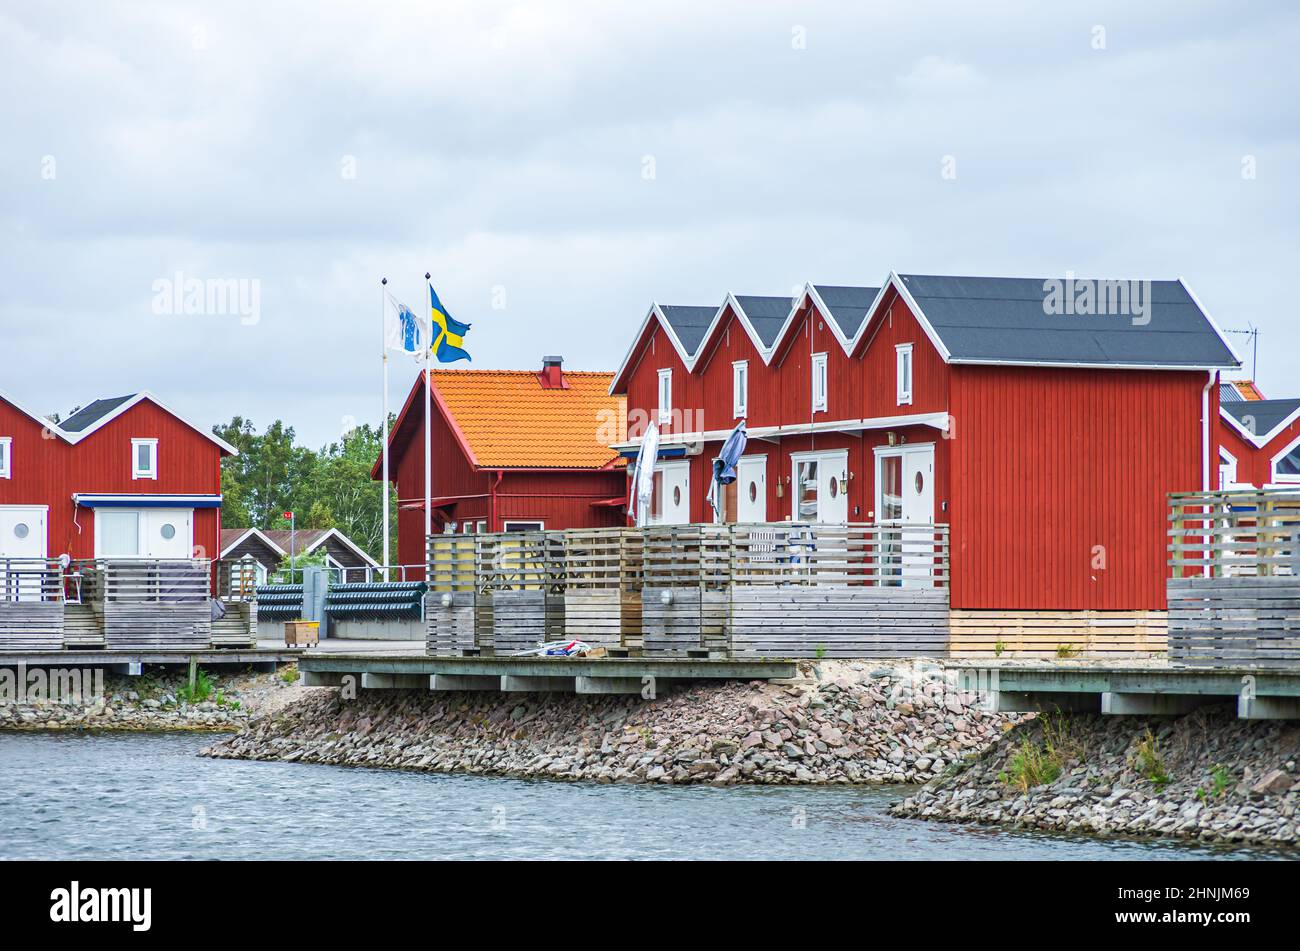 Mellerud, Dalsland, Västra Götalands län, Sweden: Sunnana hamn's picturesque holiday home complex at Lake Vänern. Mellerud, Dalsland, Sweden. Stock Photo